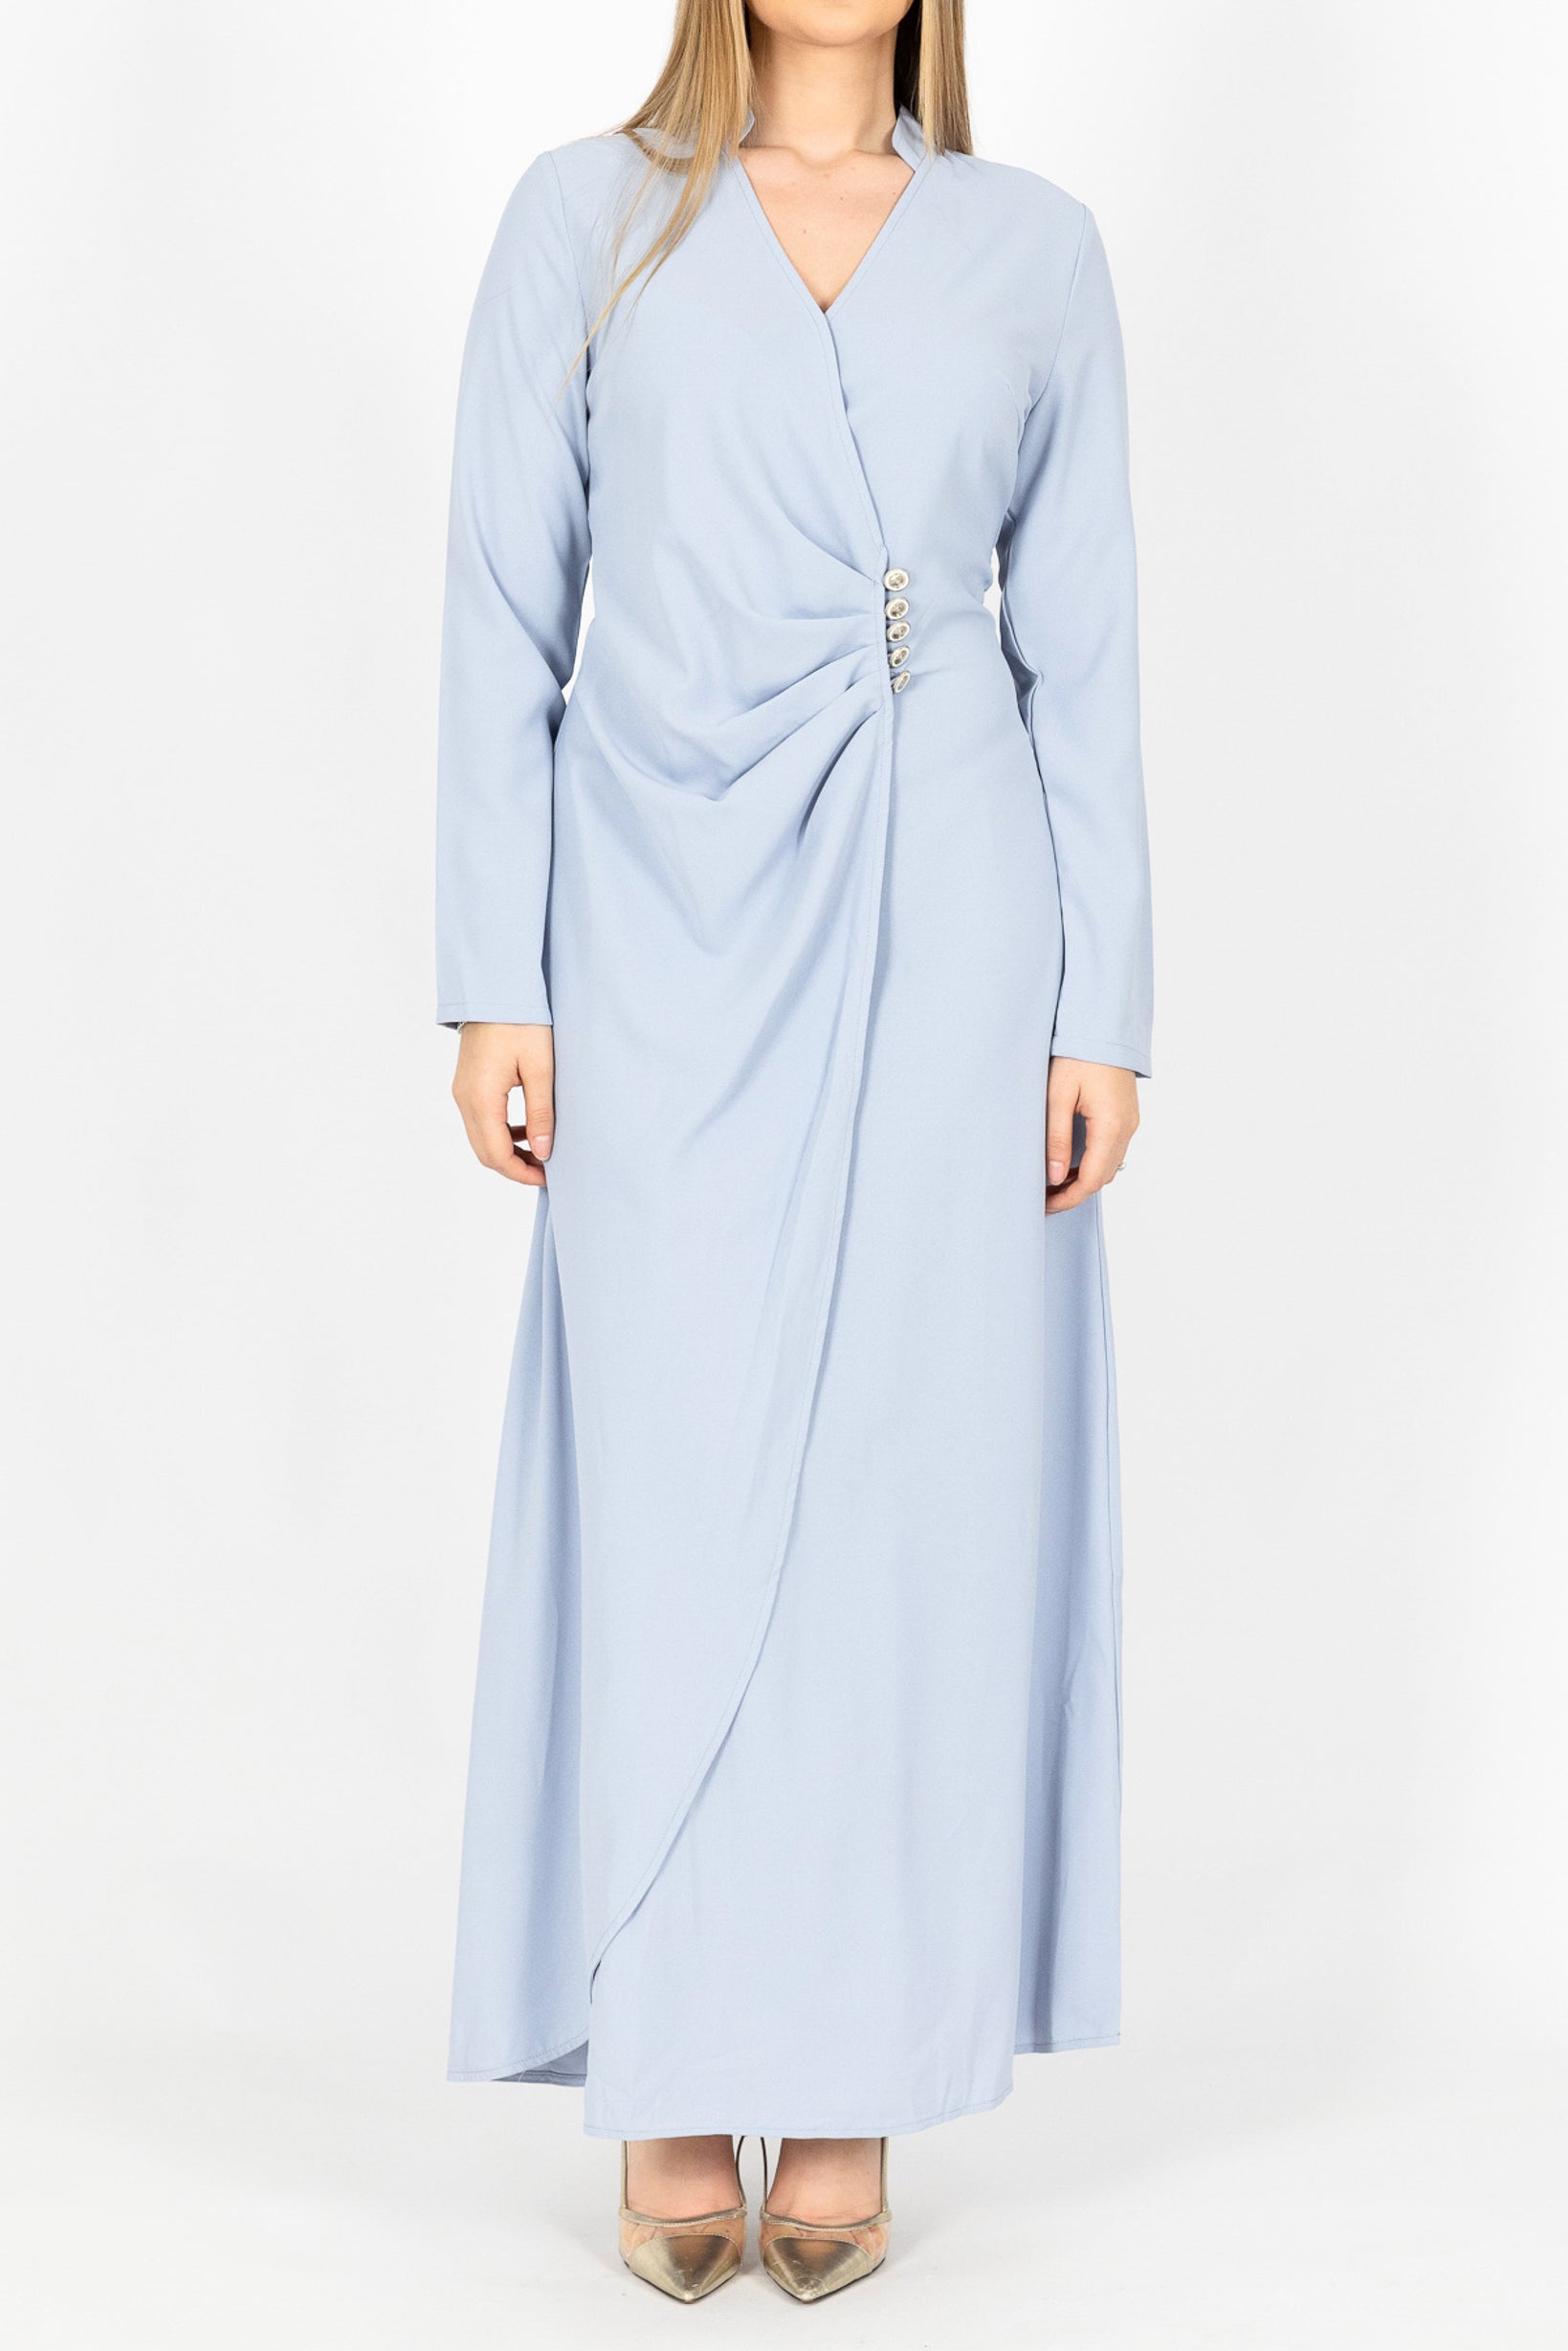 M7879LightBlue-dress-abaya